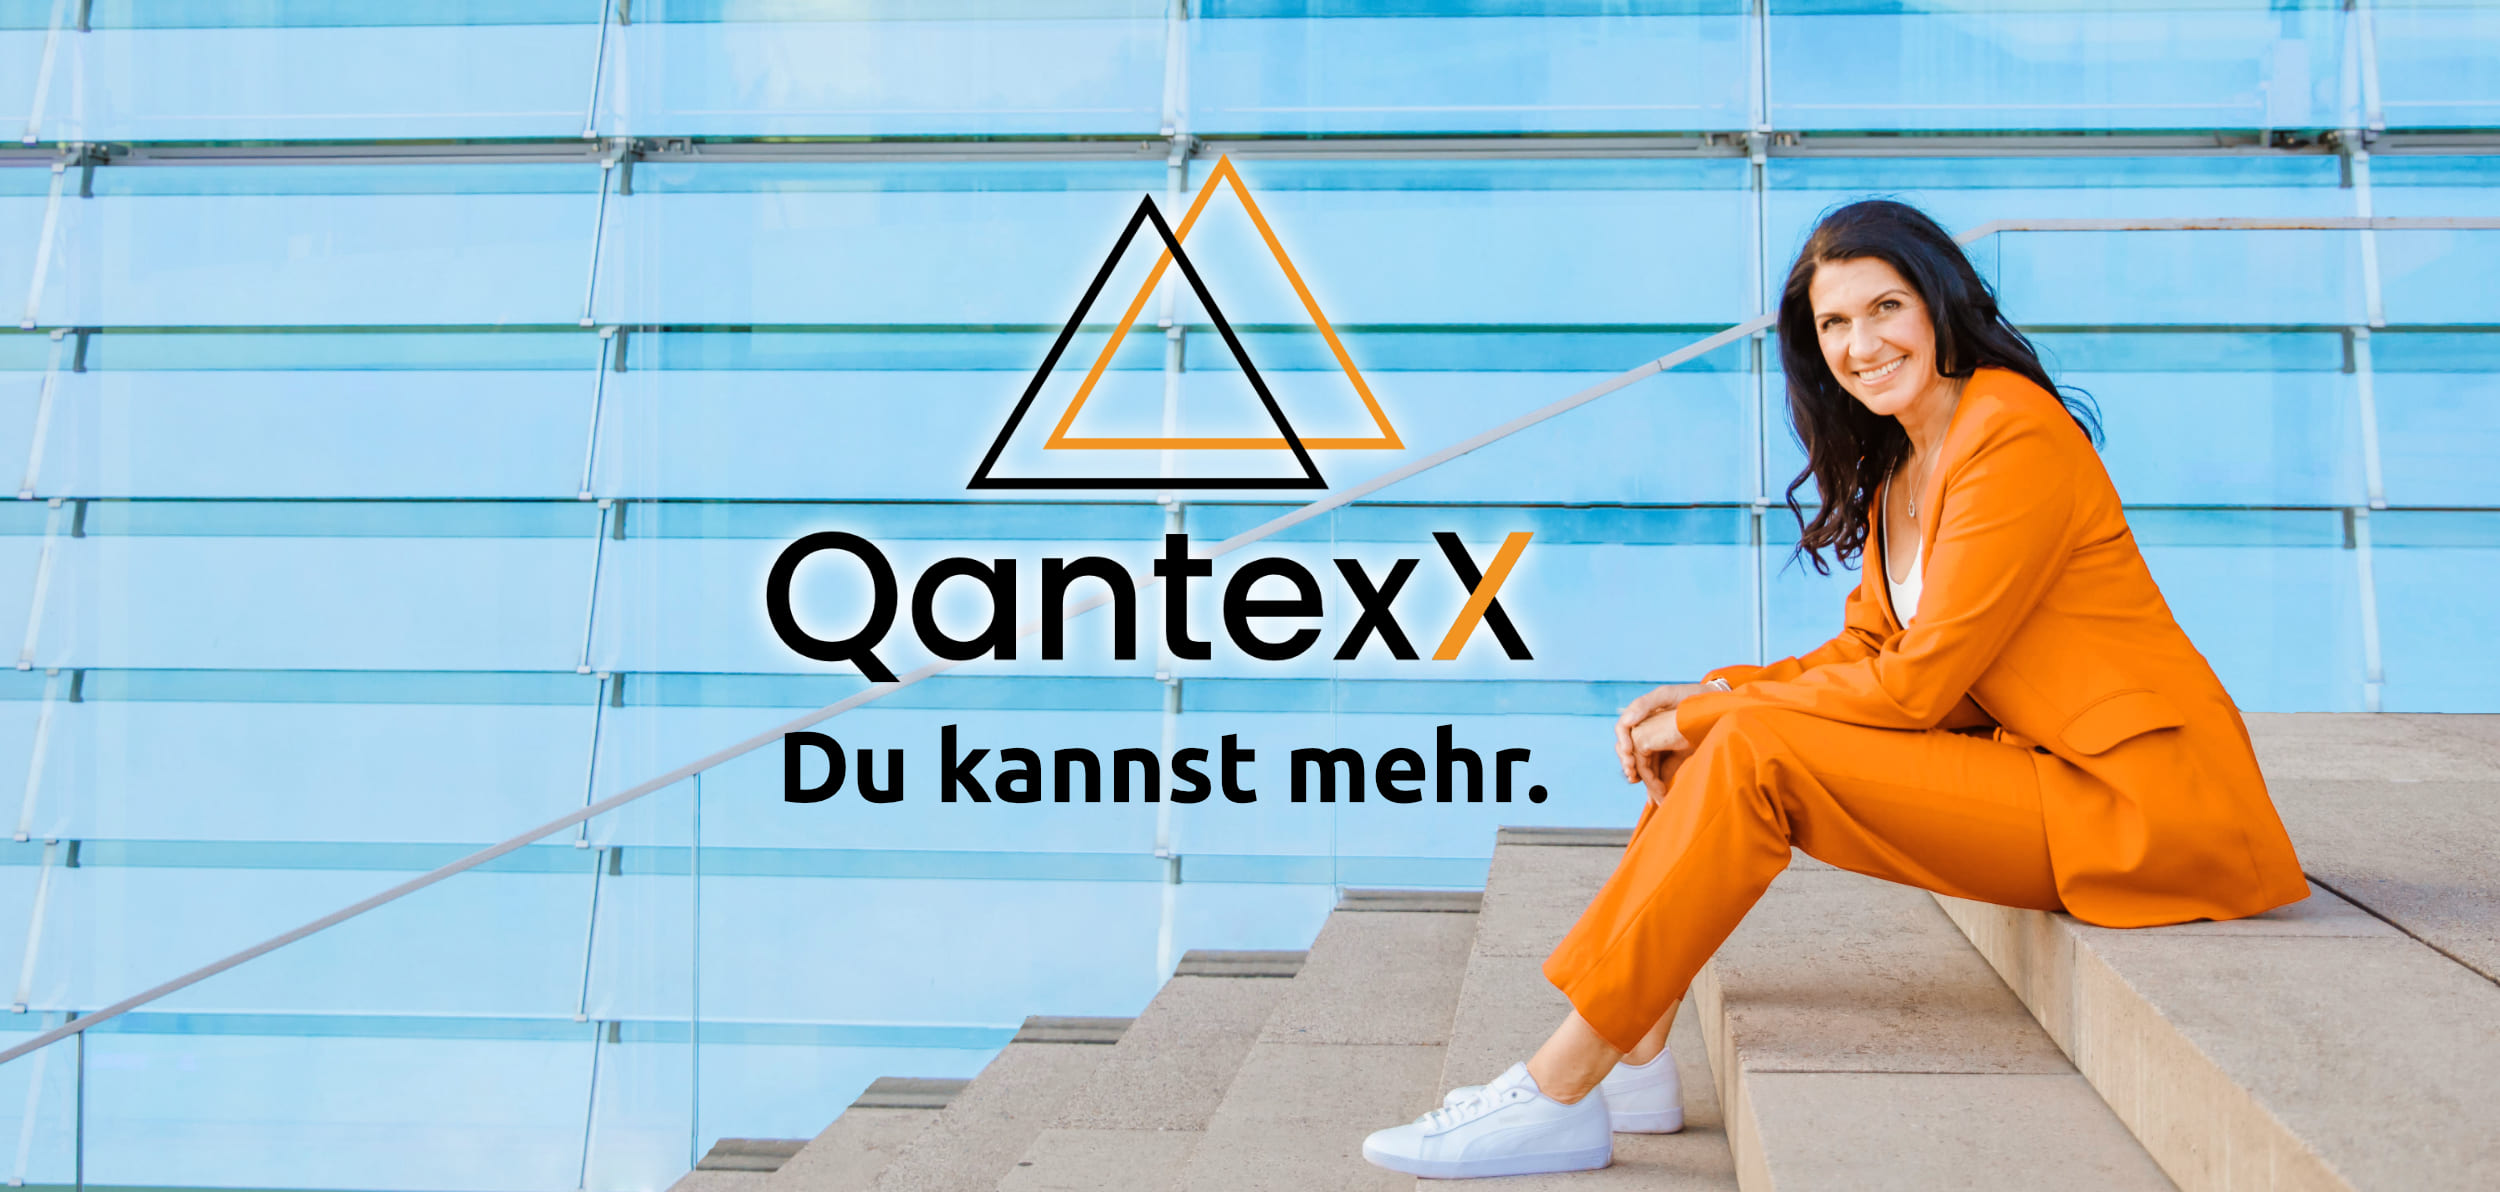 (c) Qantexx.com